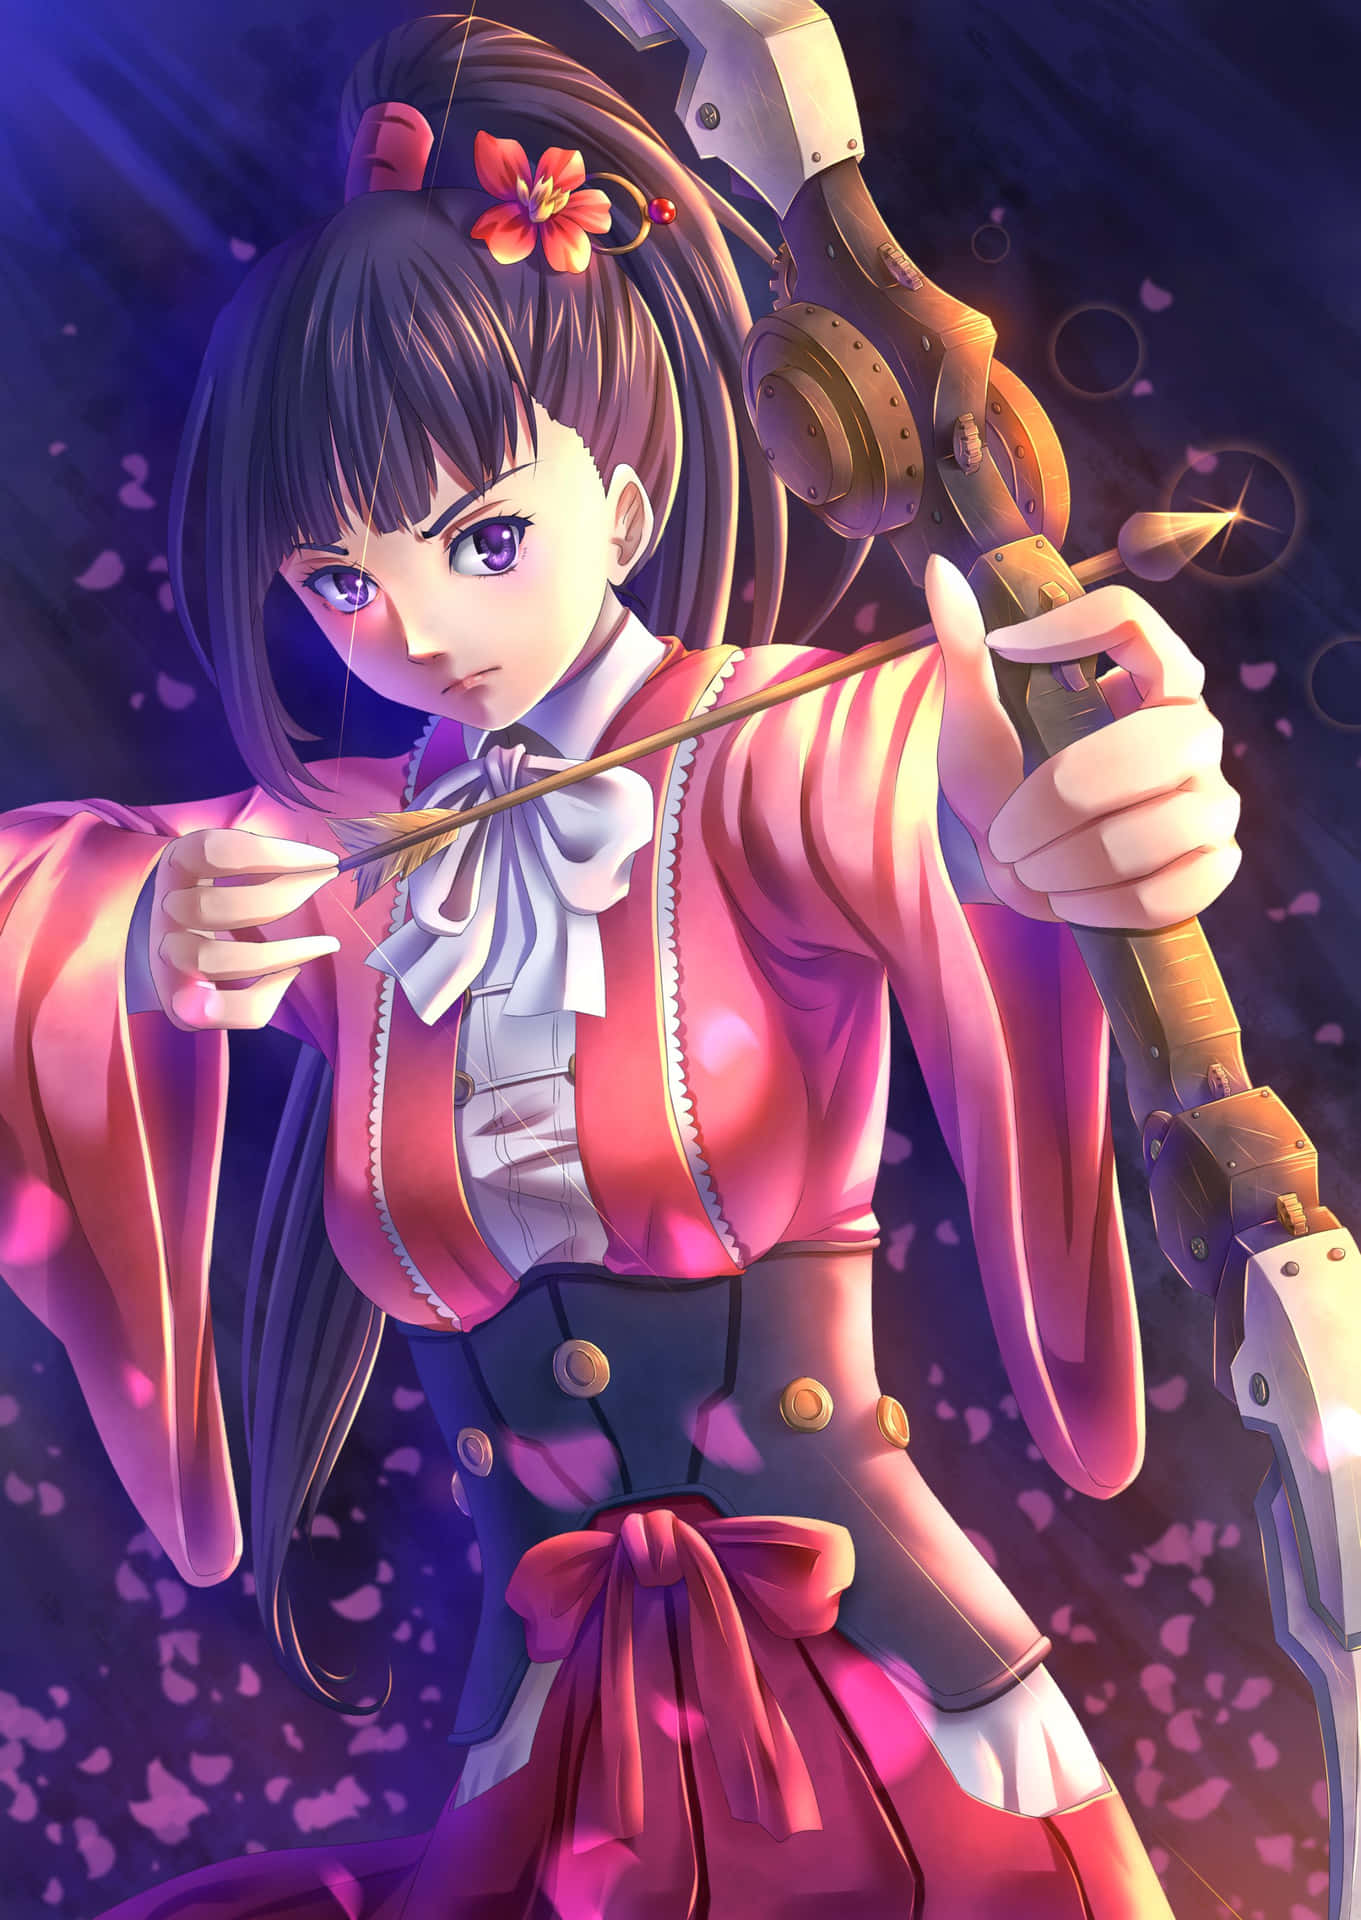 Anime Girl With Bowand Arrow Wallpaper